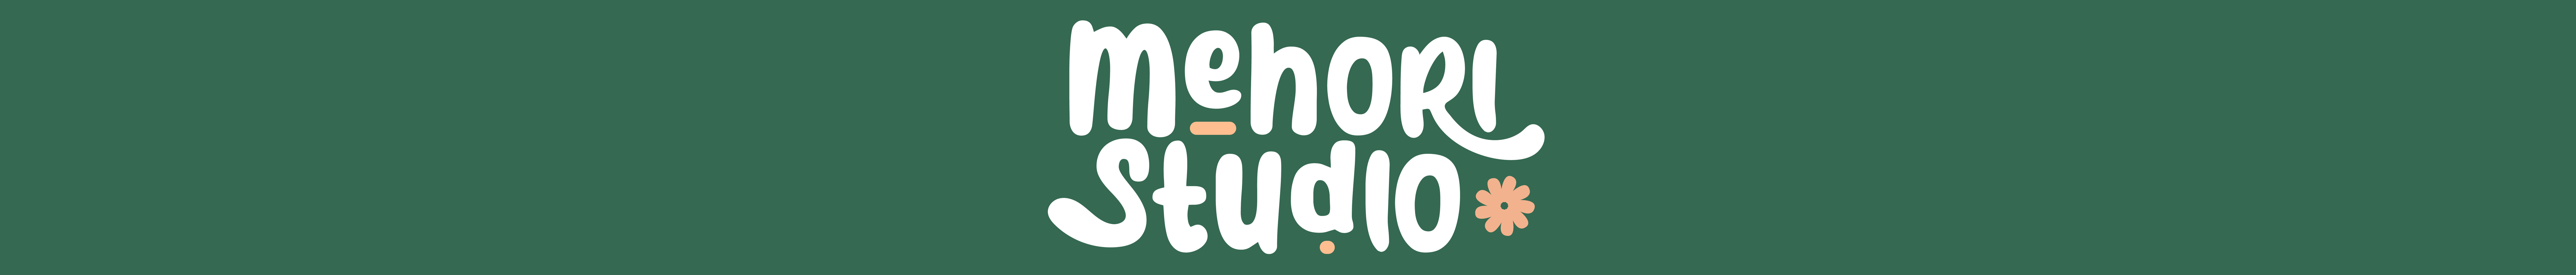 Mehori Studio のプロファイルバナー